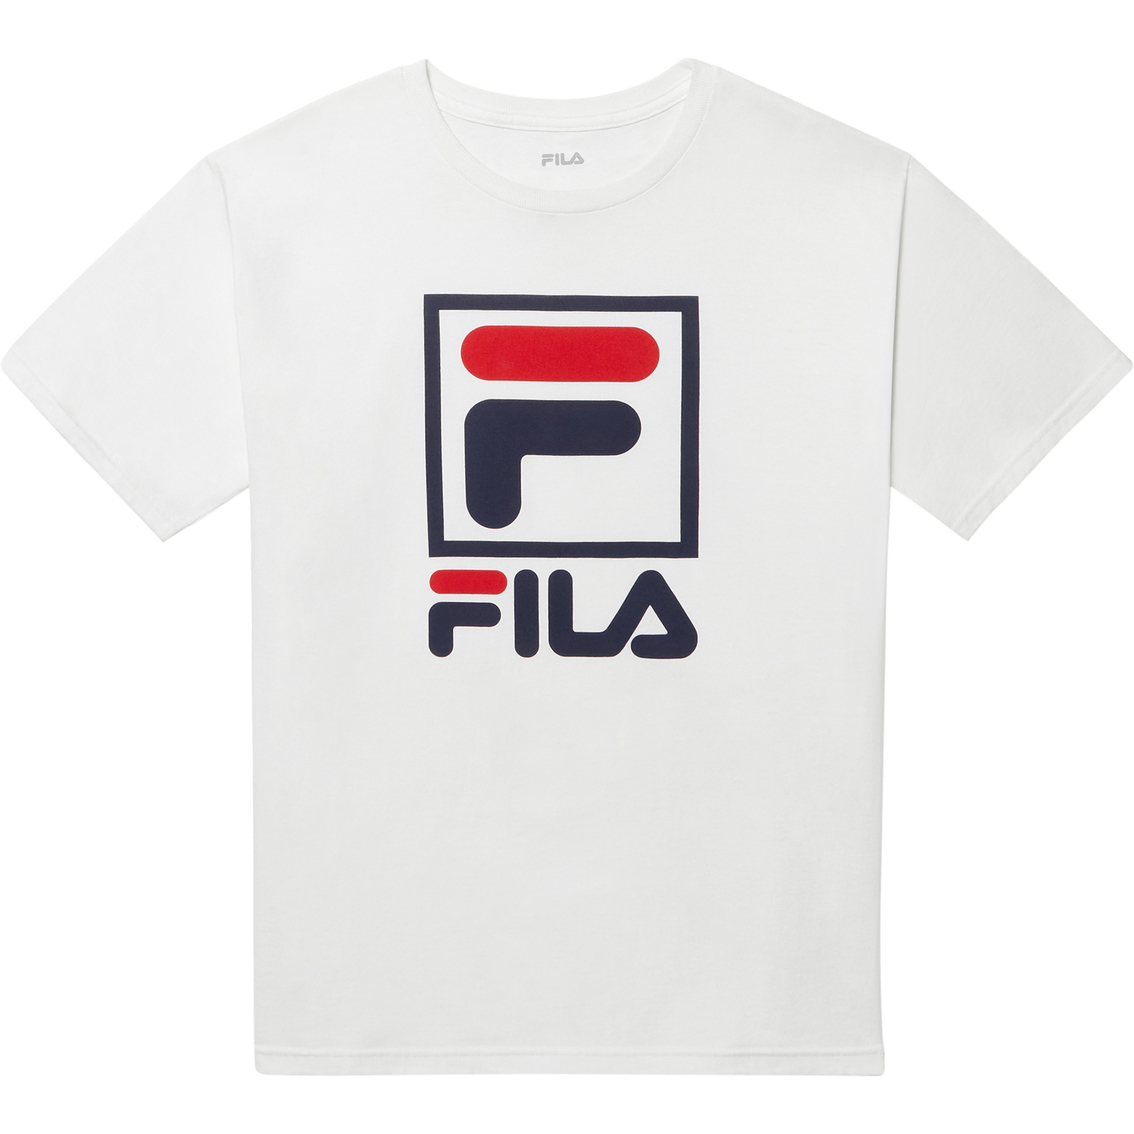 Fila Stacked Tee | T-shirts | Clothing 